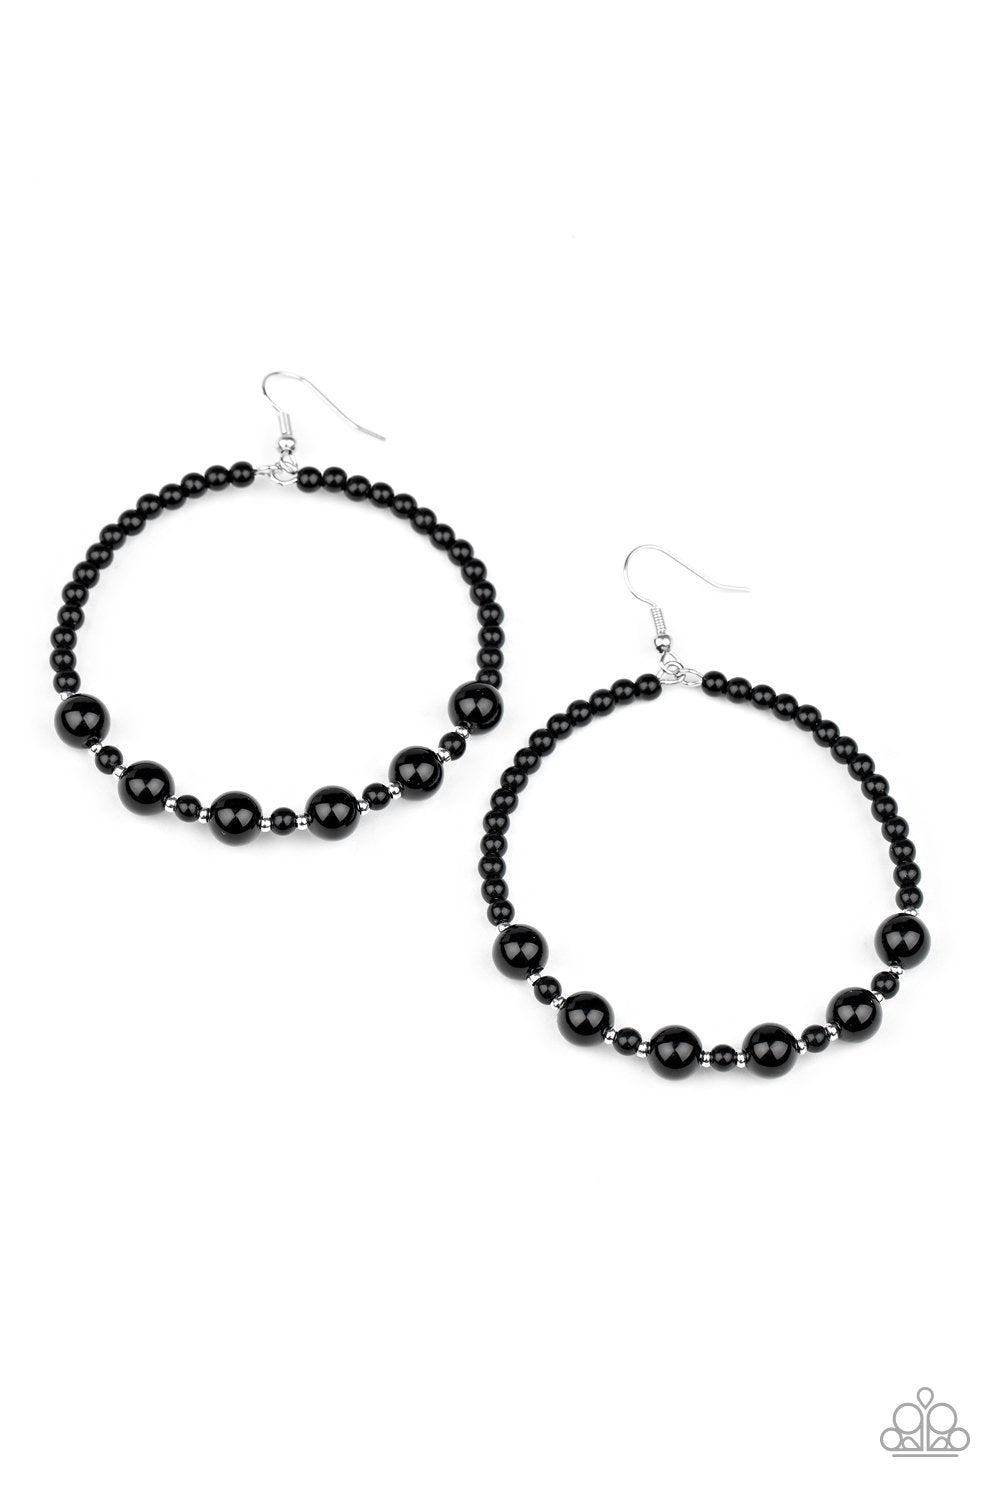 Boss Posh Black Beaded Hoop Earrings - Paparazzi Accessories - lightbox -CarasShop.com - $5 Jewelry by Cara Jewels